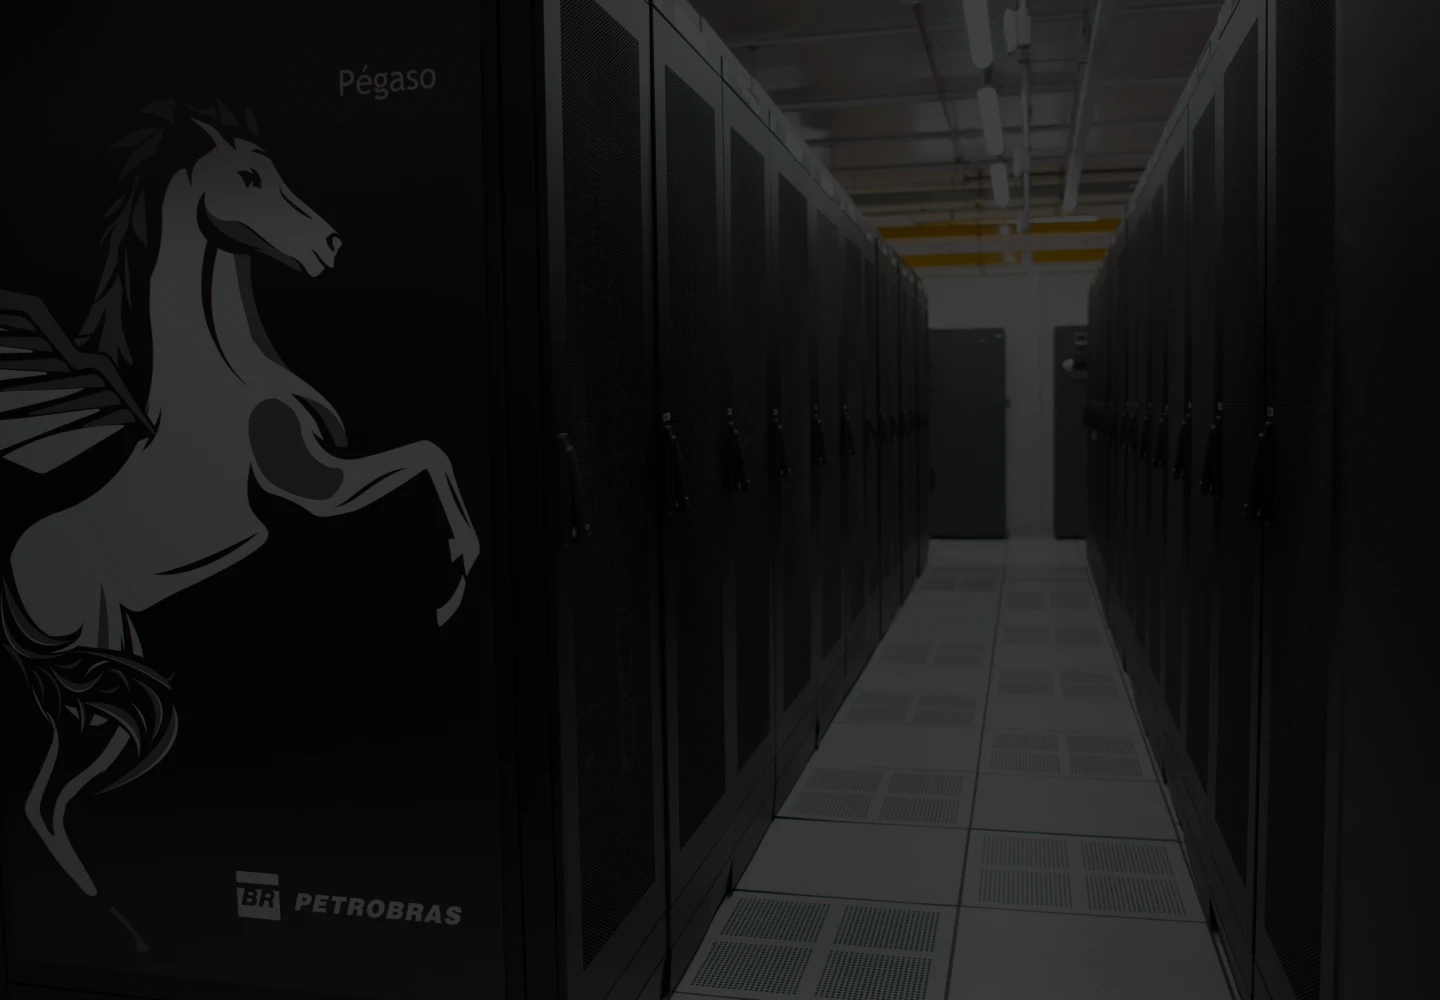 Photograph of Petrobras' Supercomputer Pegasus.